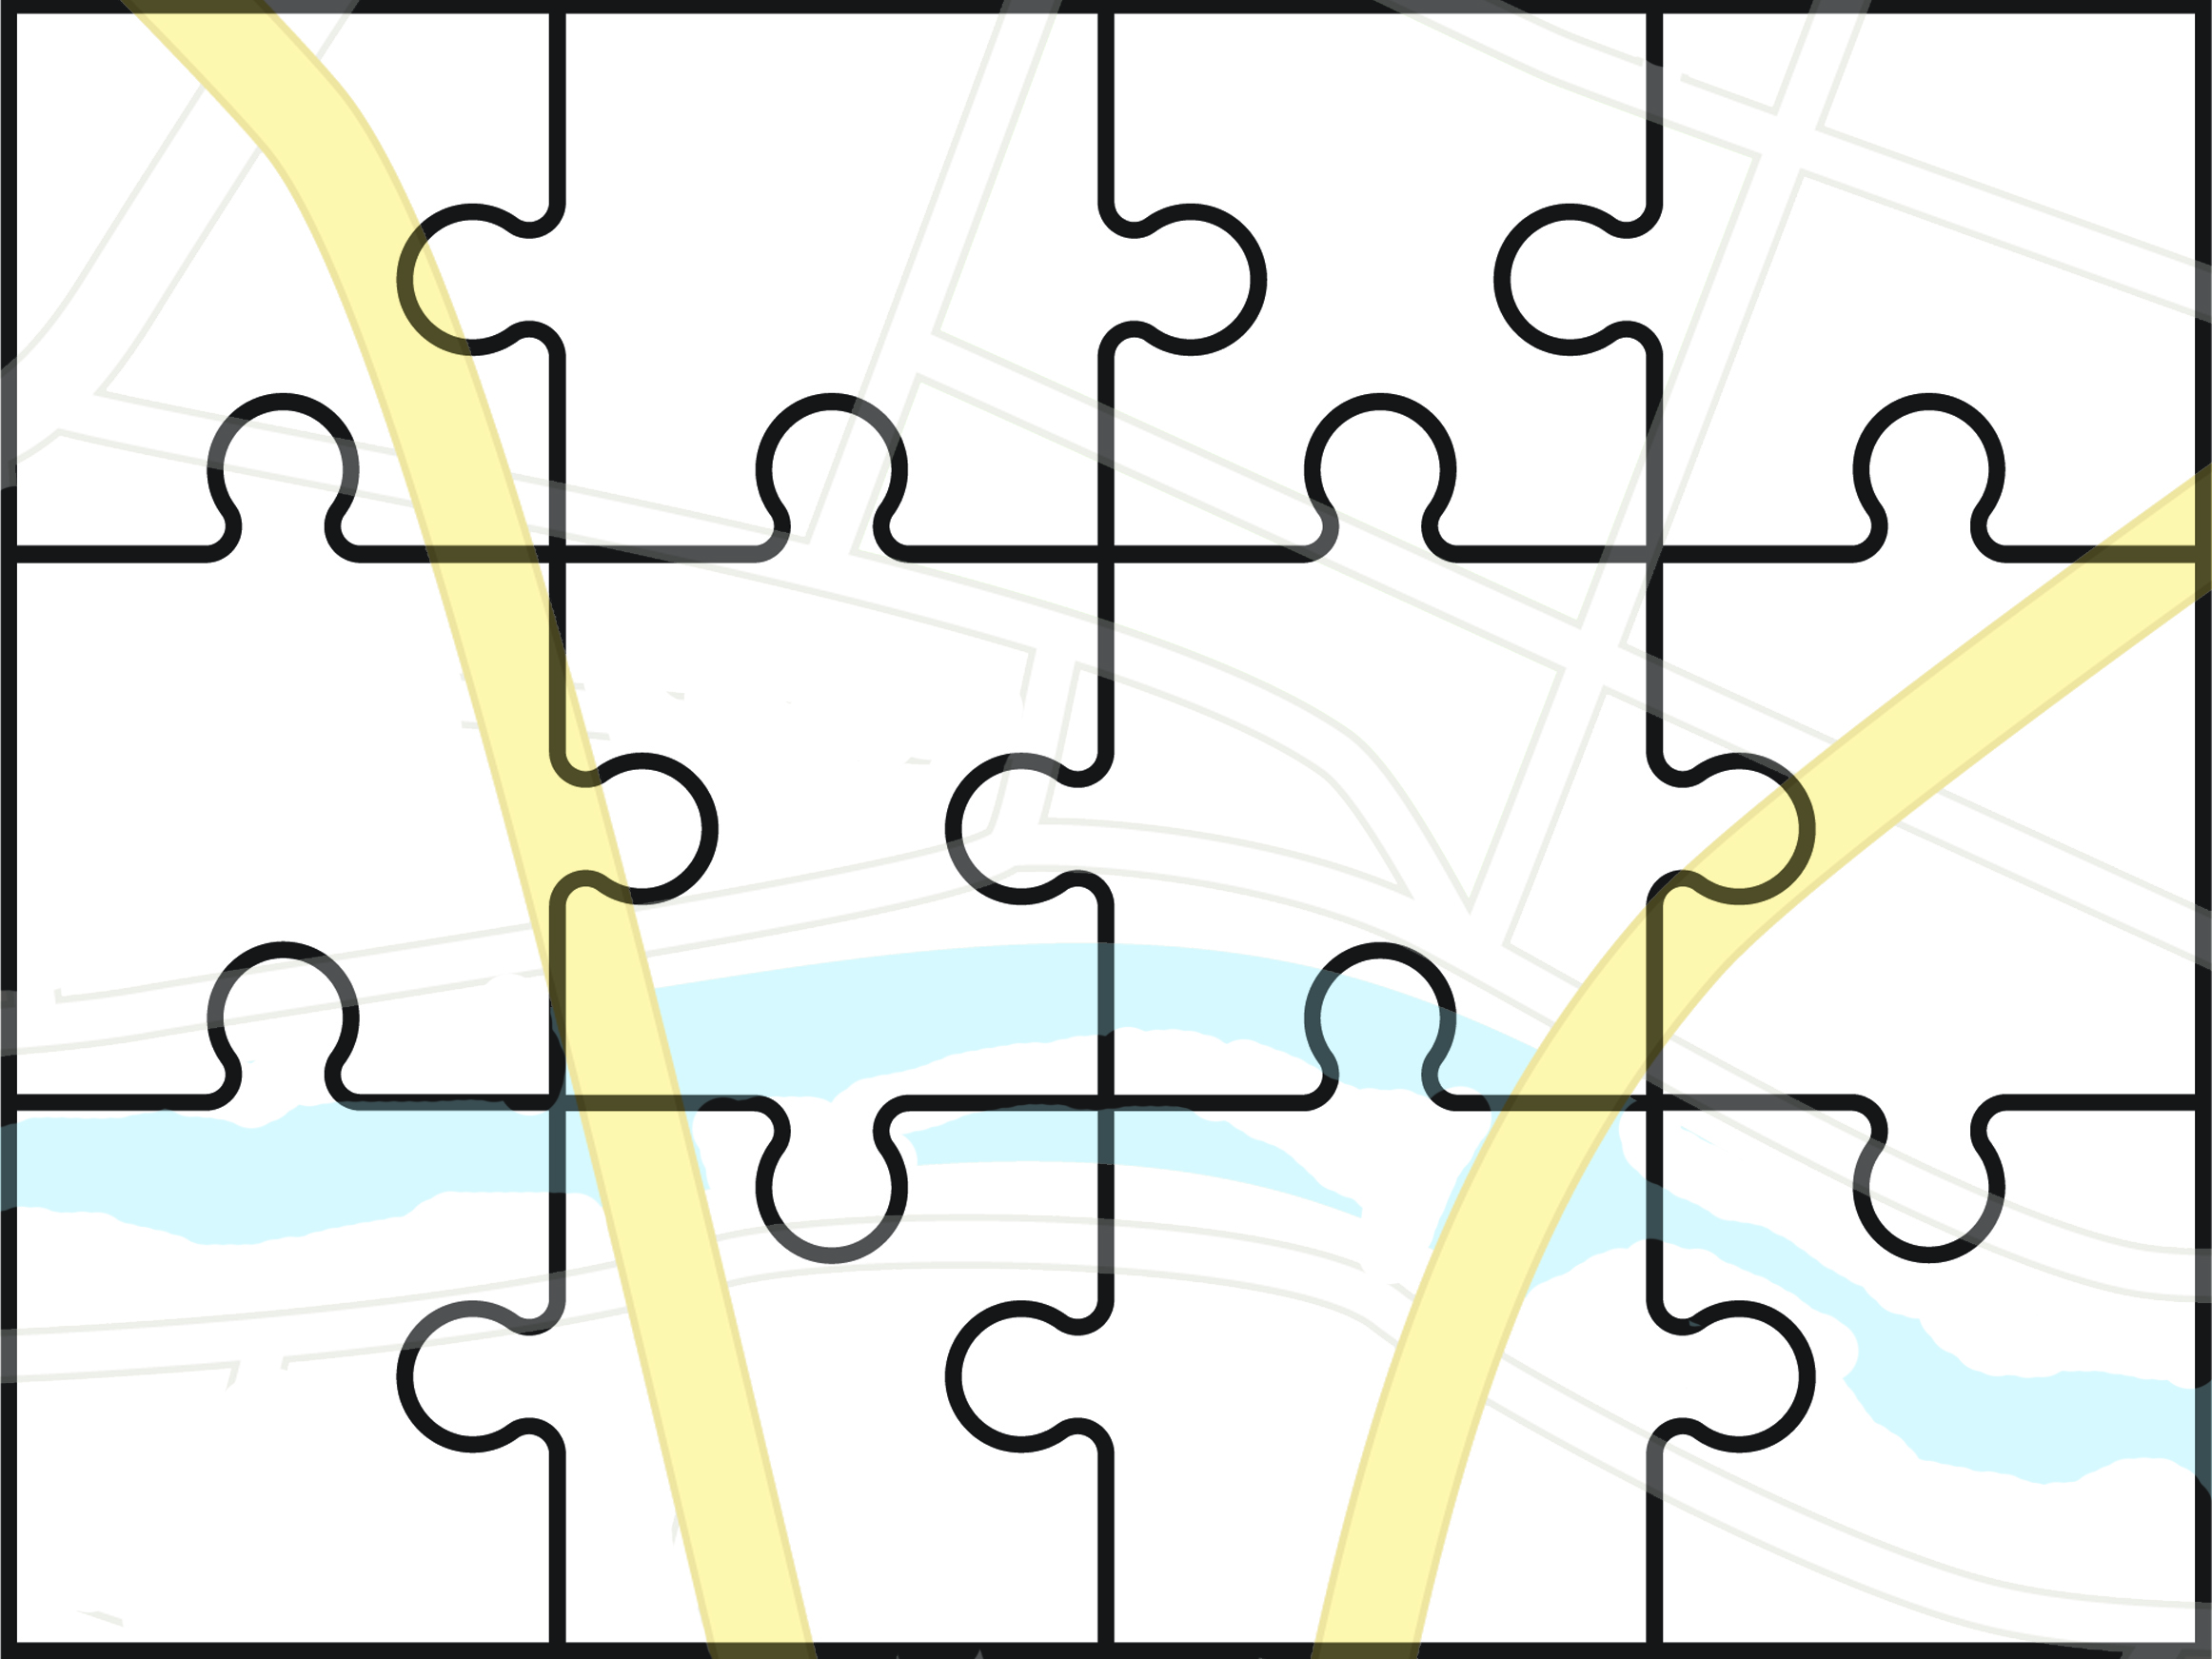 image puzzle12coopcarto.jpg (1.0MB)